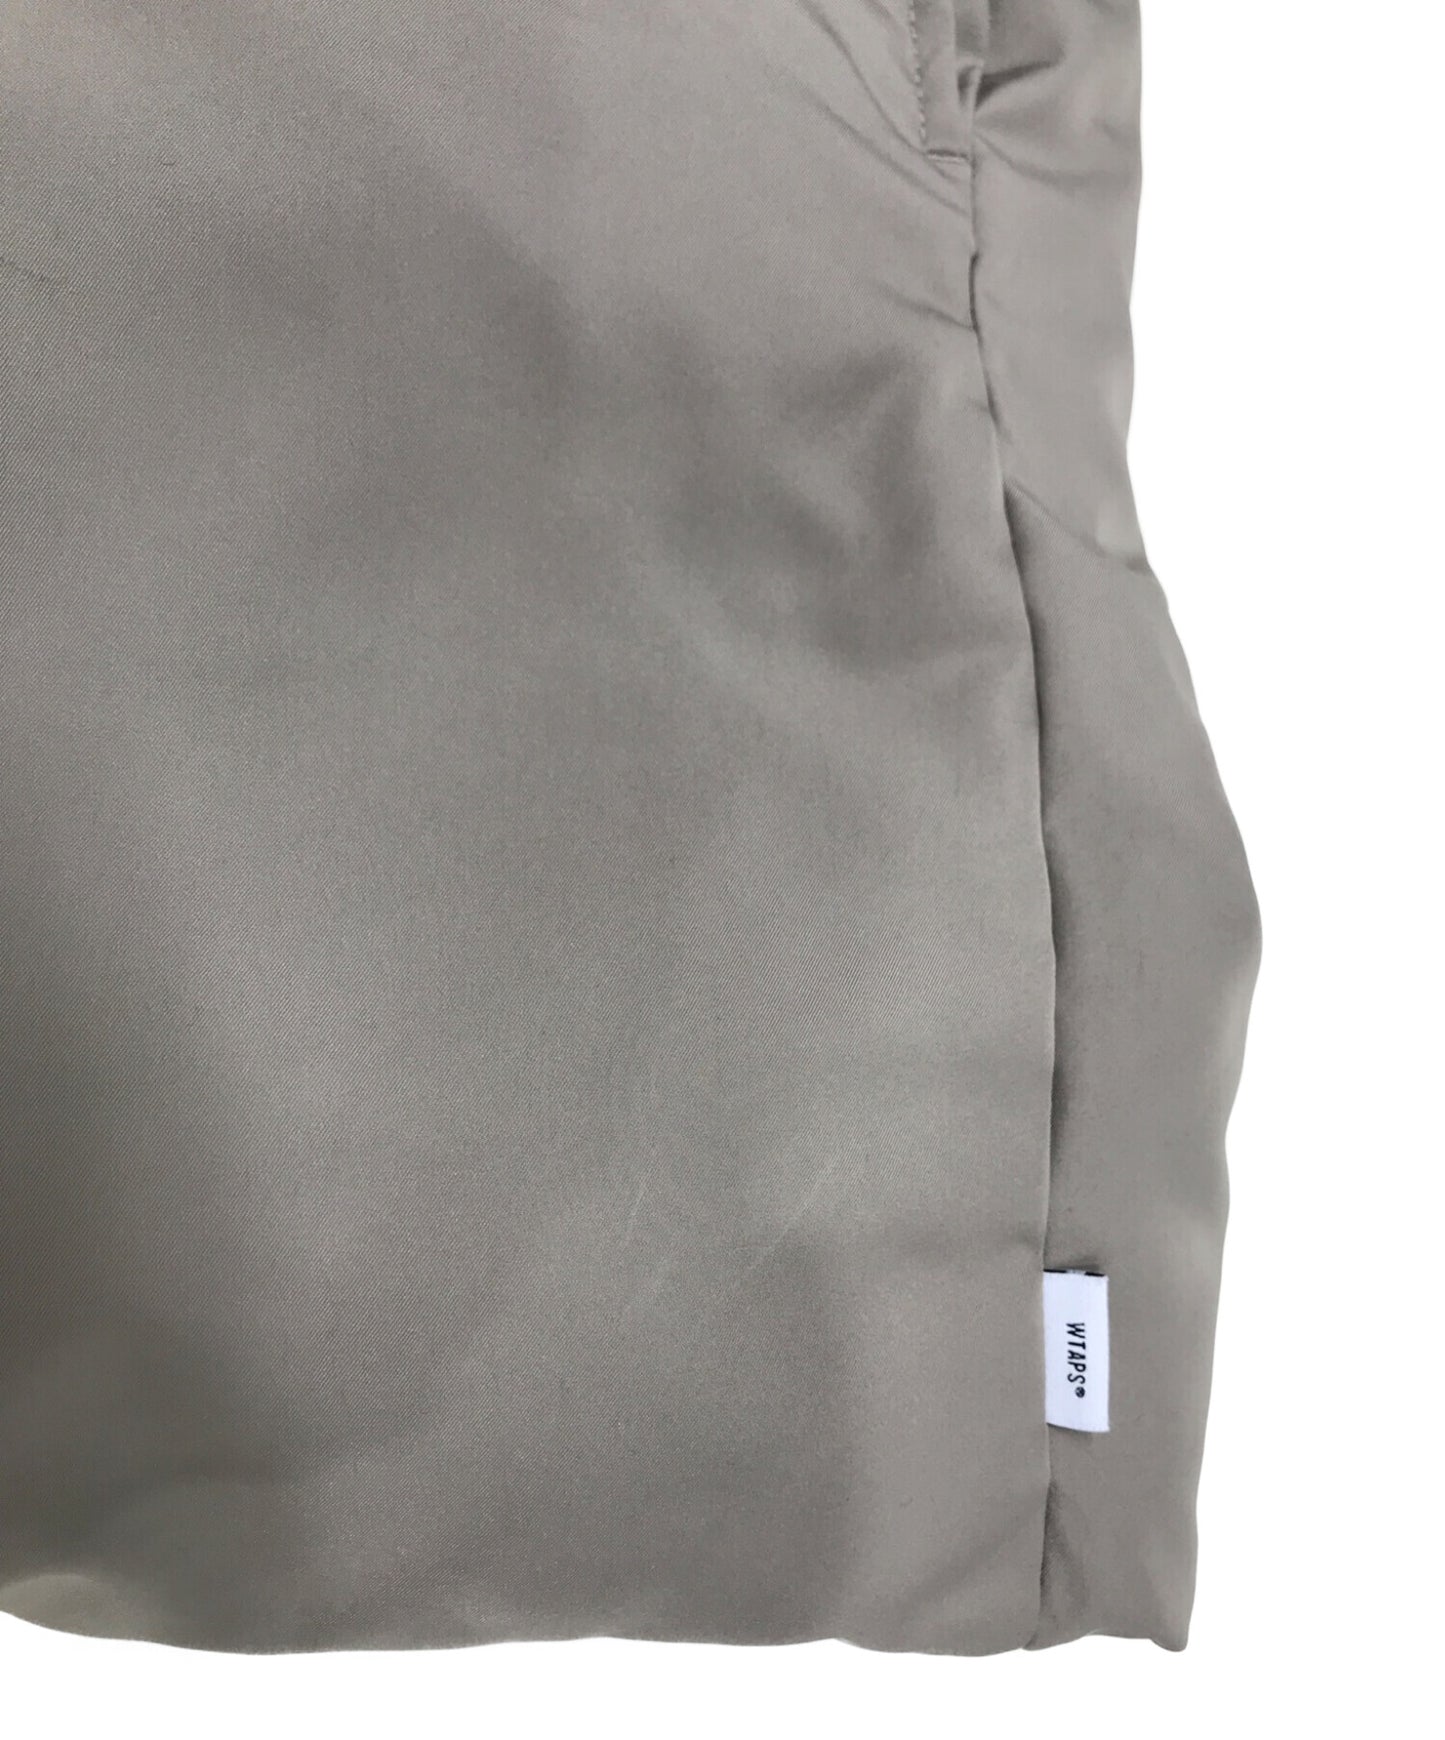 [Pre-owned] WTAPS Cotton Hanten Jacket 212BRDT-JKM06